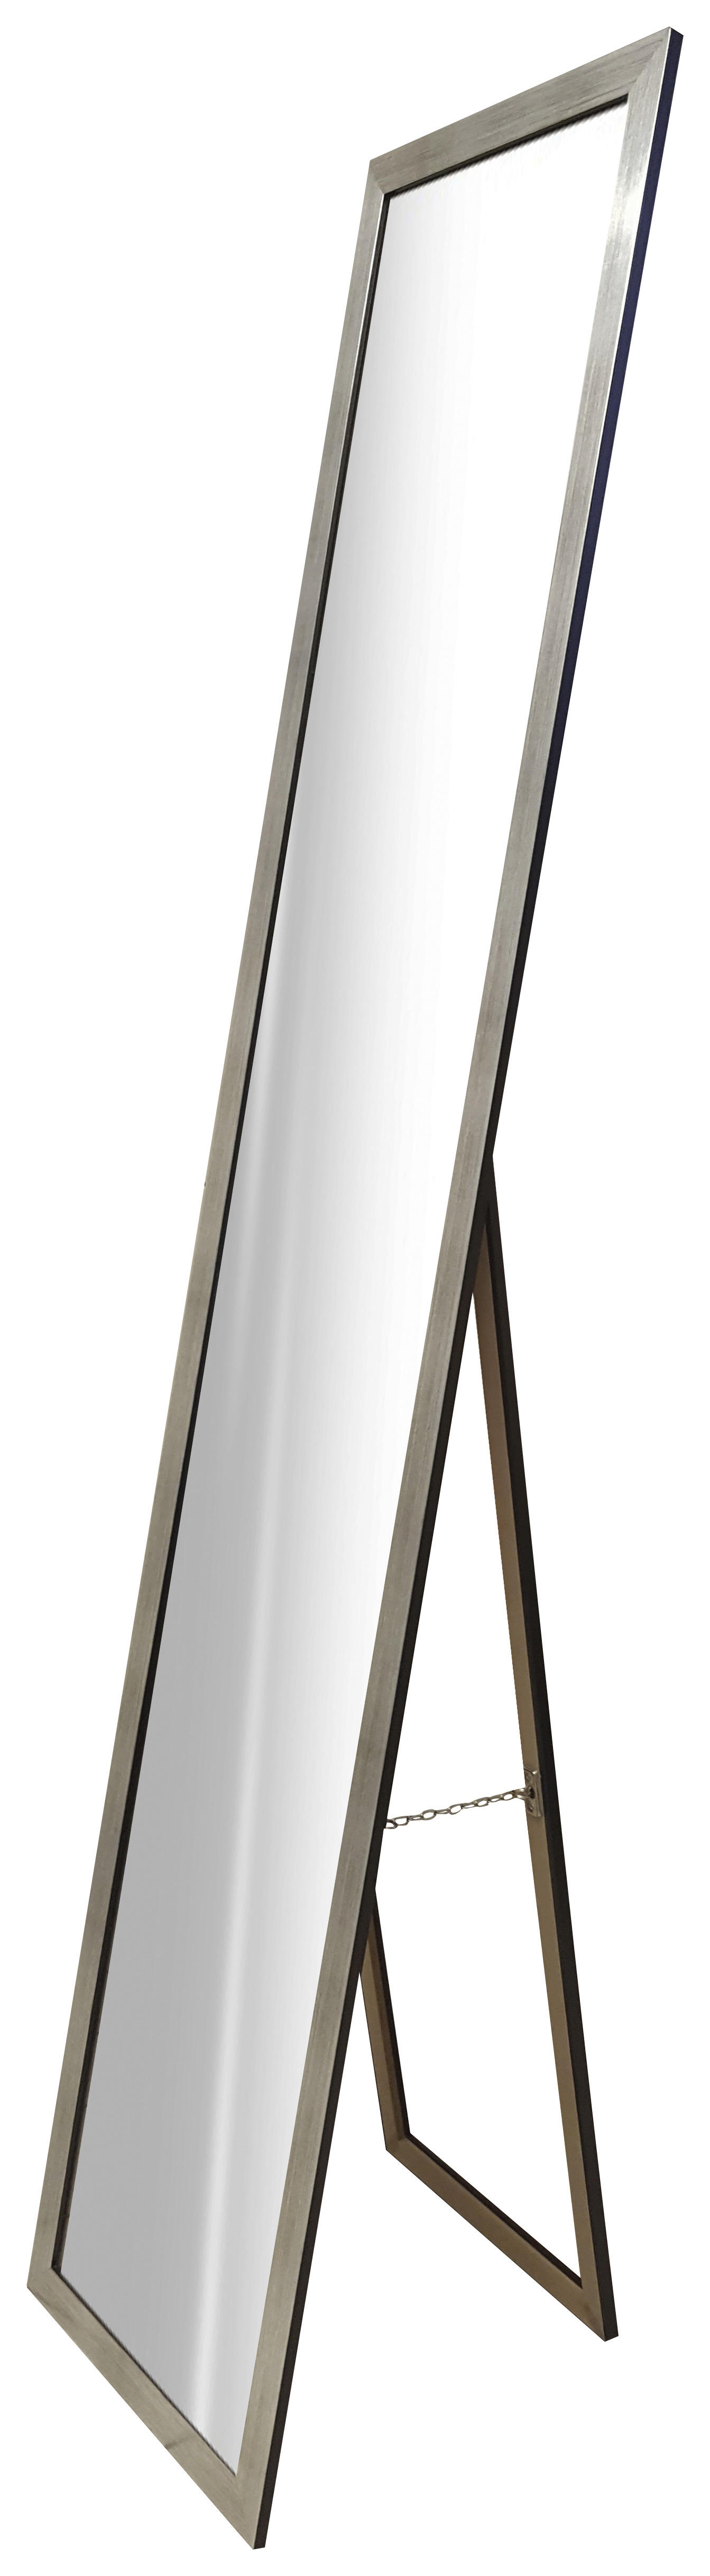 GOLVSPEGEL 36/175/3,5 cm  - silver, Design, glas/träbaserade material (36/175/3,5cm) - Carryhome